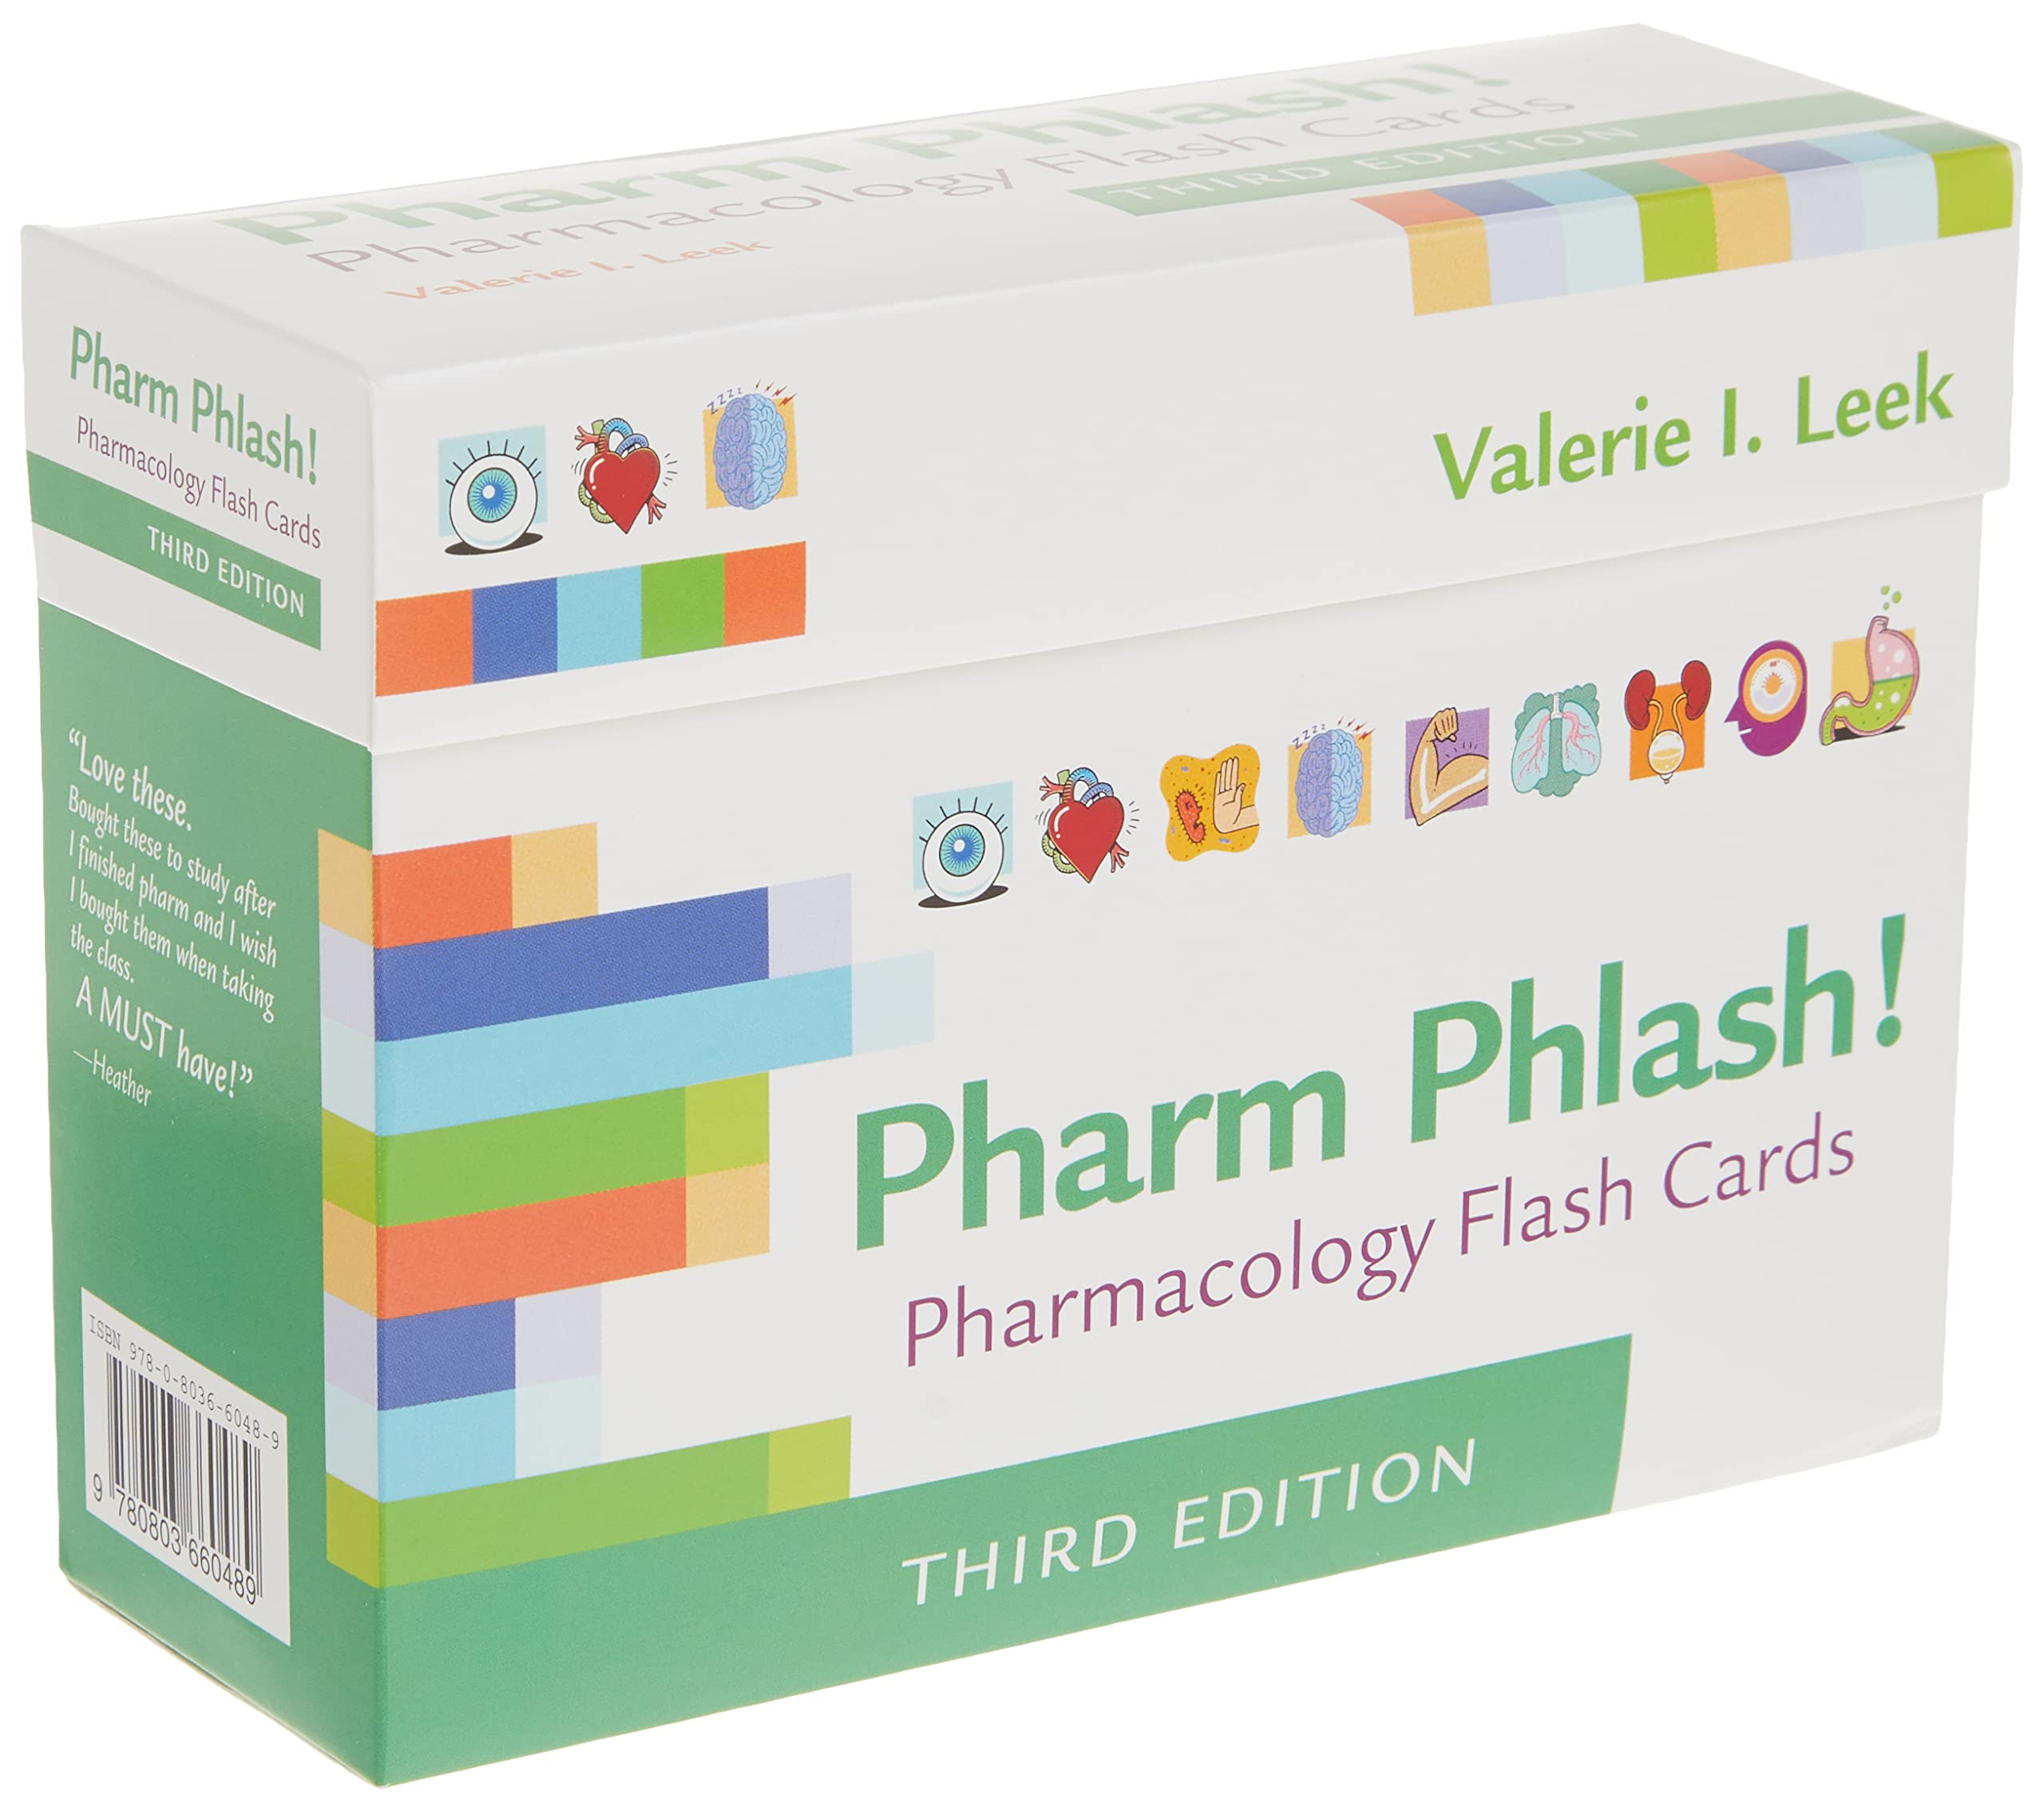 Pharm Phlash!: Pharmacology Flash Cards, 3rd Edition  by Valerie I. Leek MSN RN CMSRN